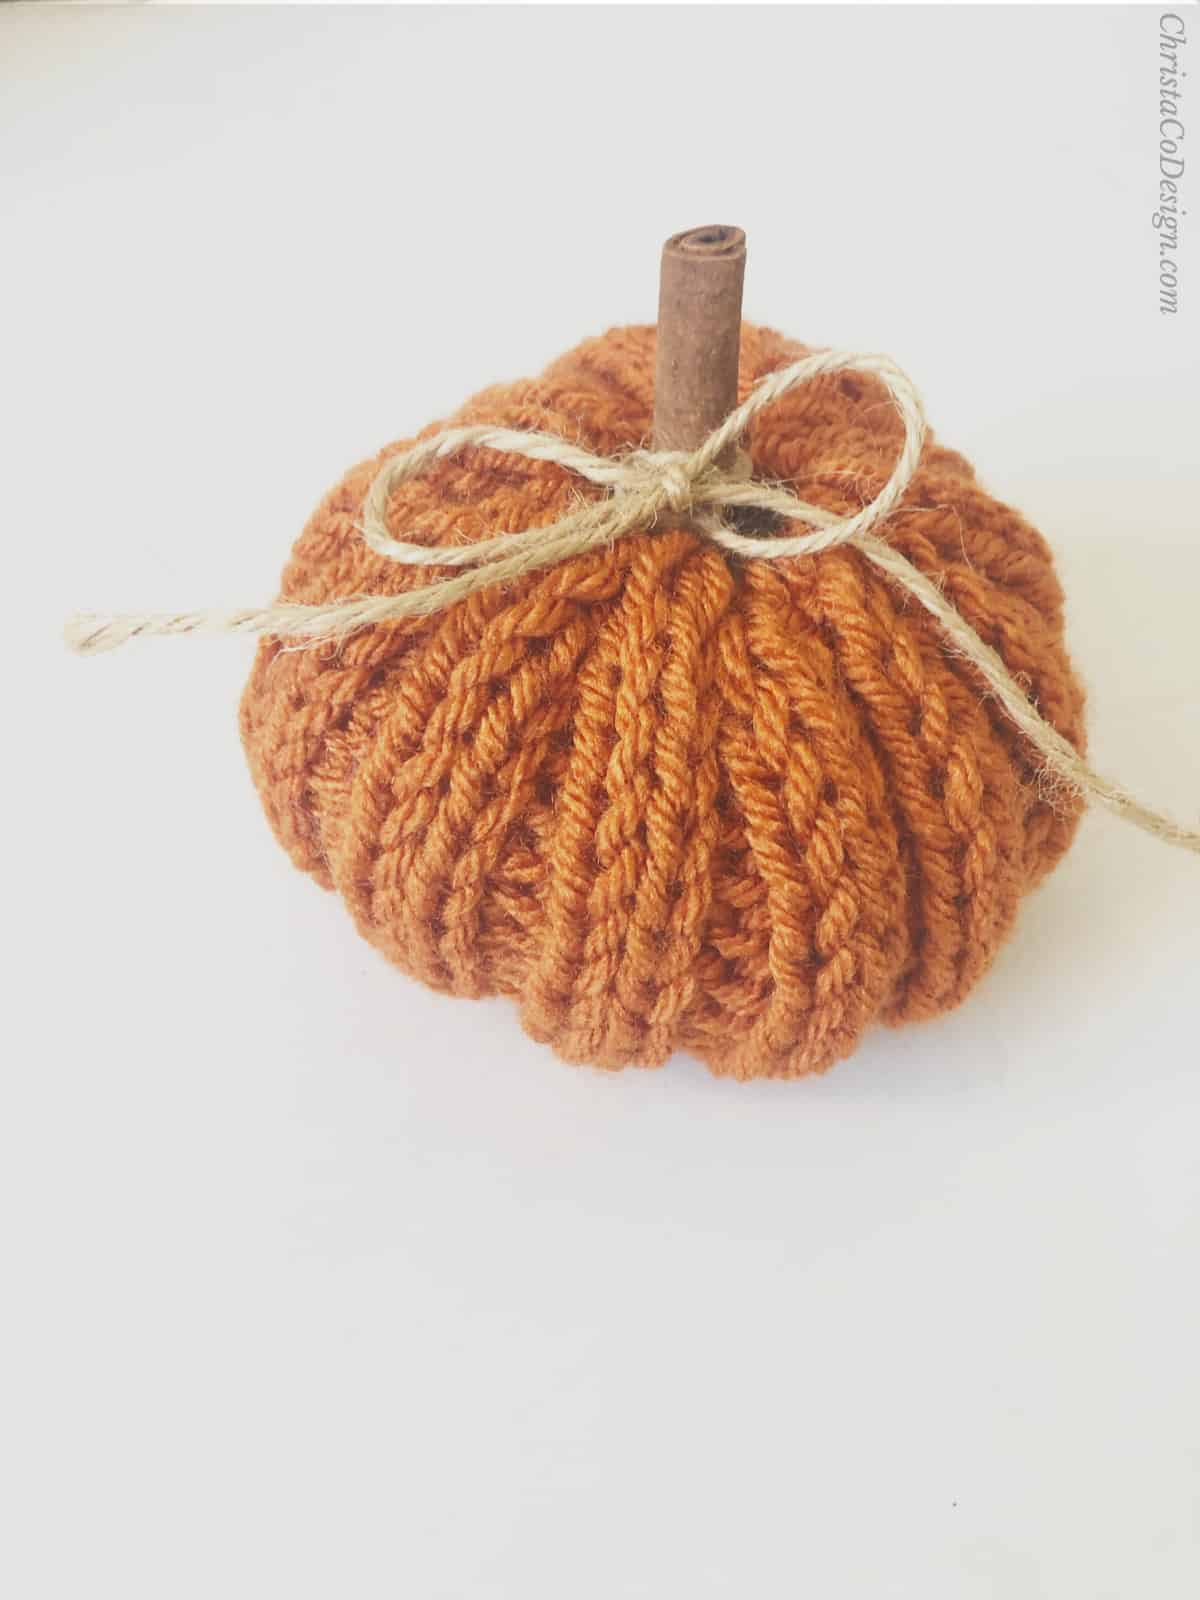 easy knit pumpkin S and L sizes-Whistle and Wool KNIT PATTERN\u2022Fall Pumpkin beginner pumpkin